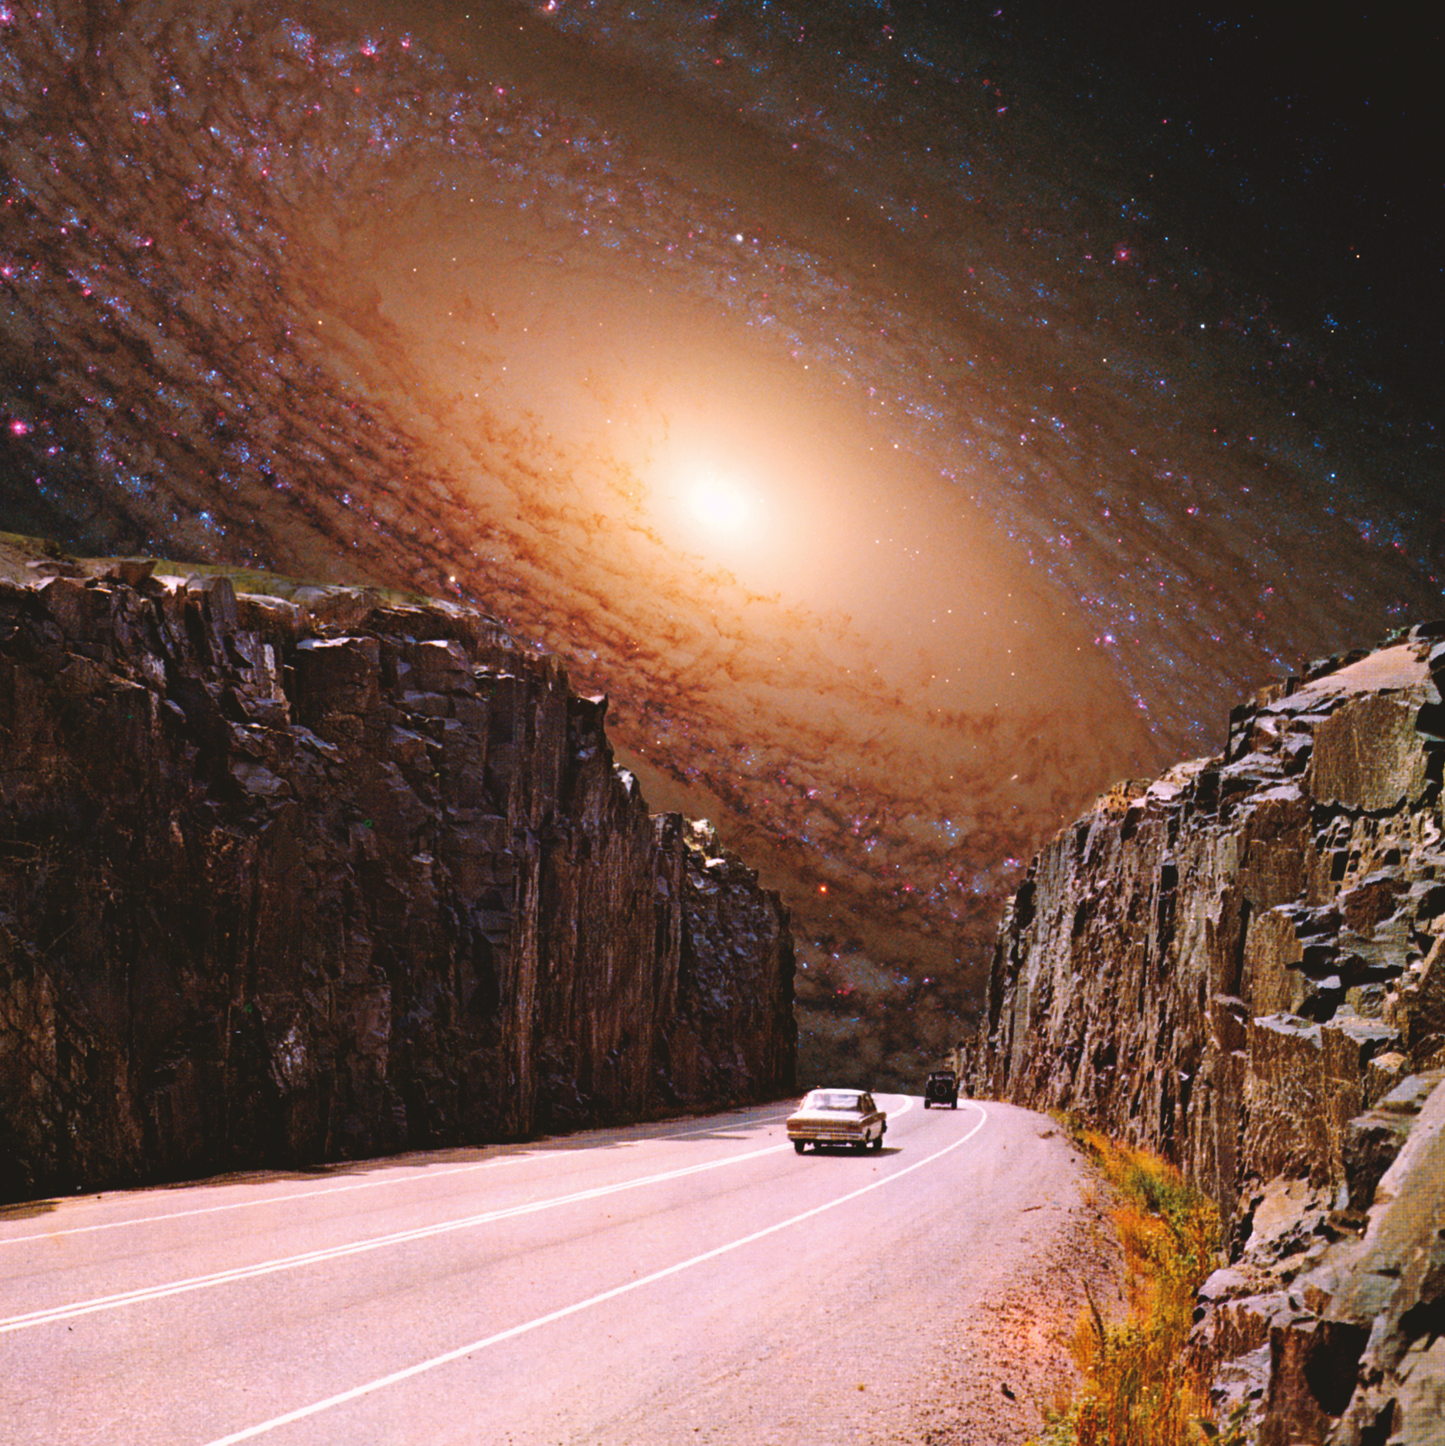 Galaxy Highway